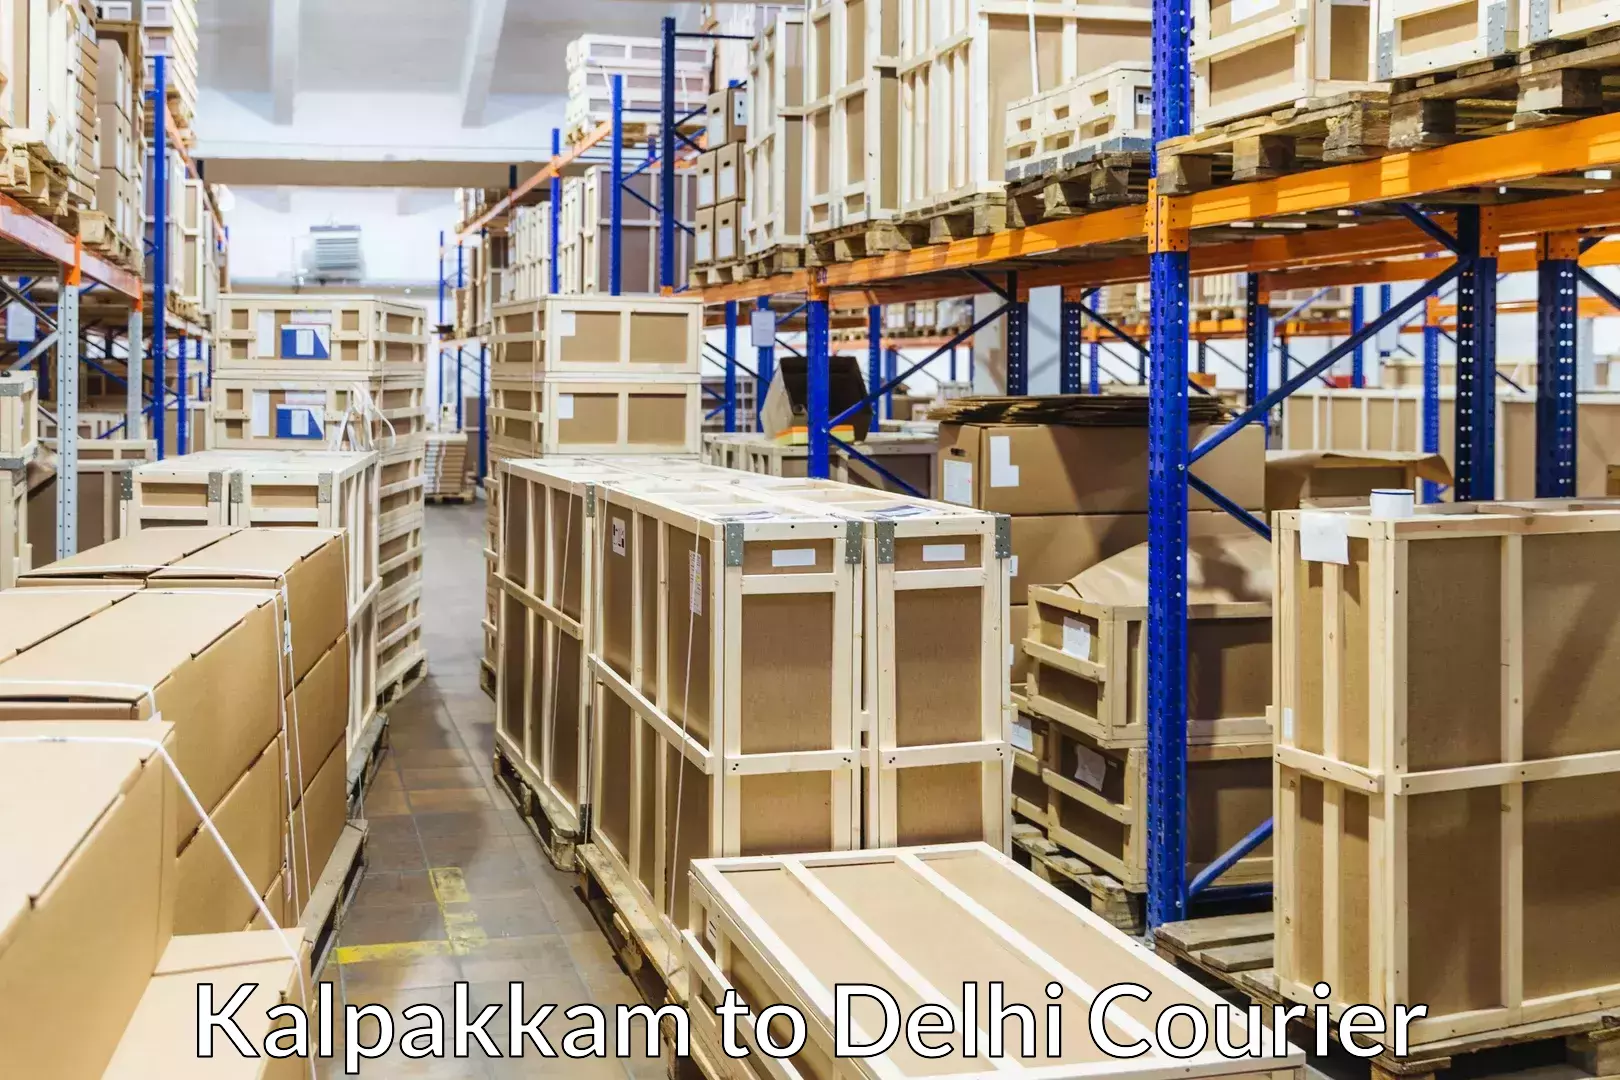 Trusted moving company Kalpakkam to Delhi